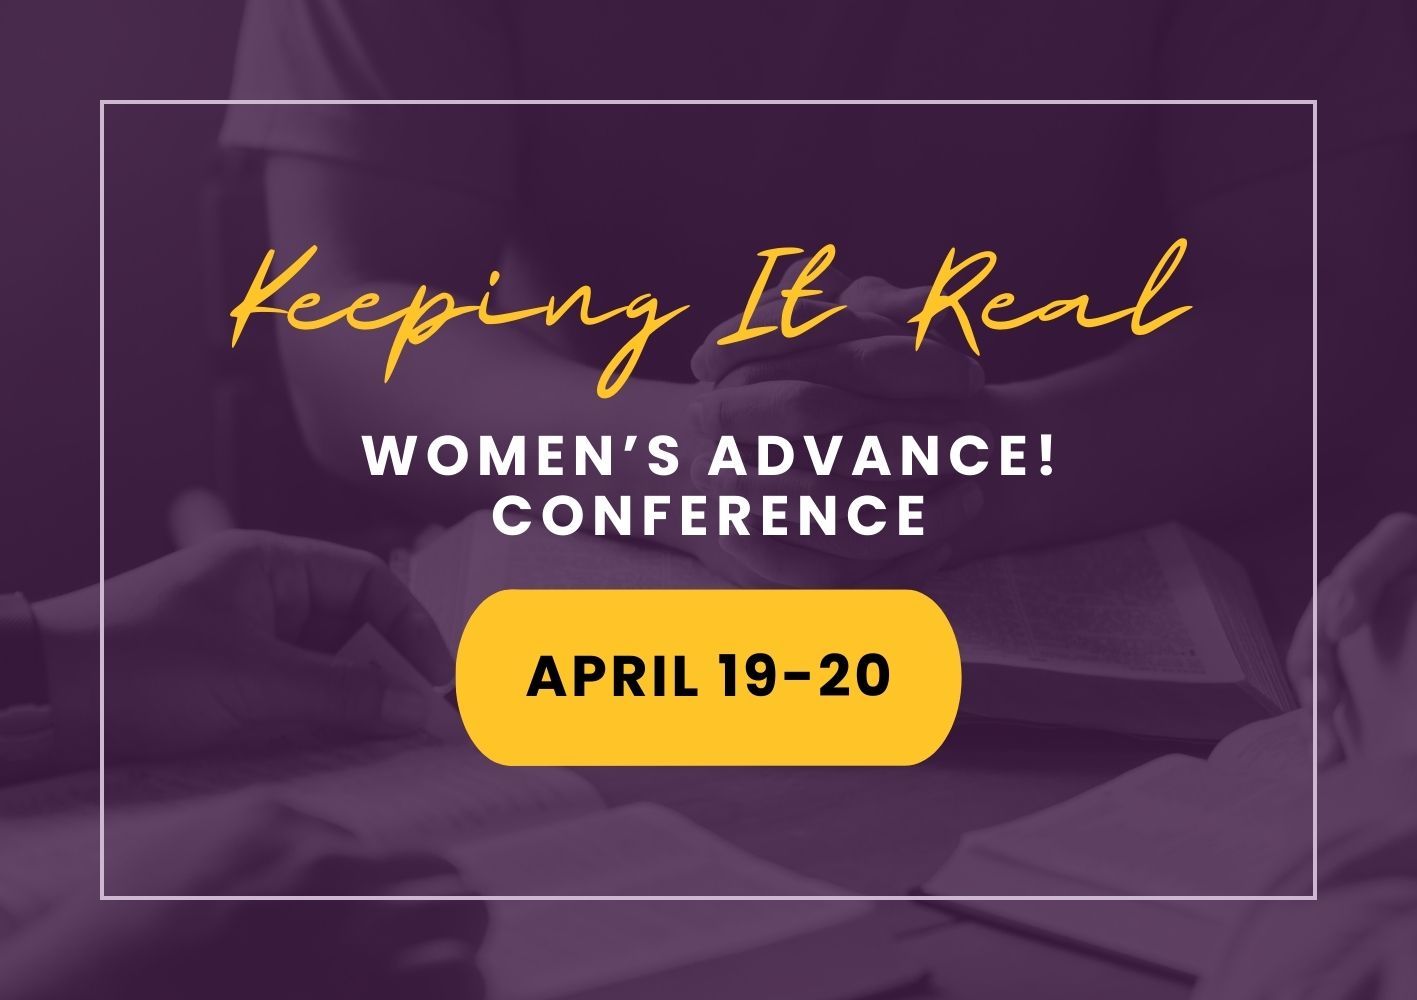 Women's Advance! Conference